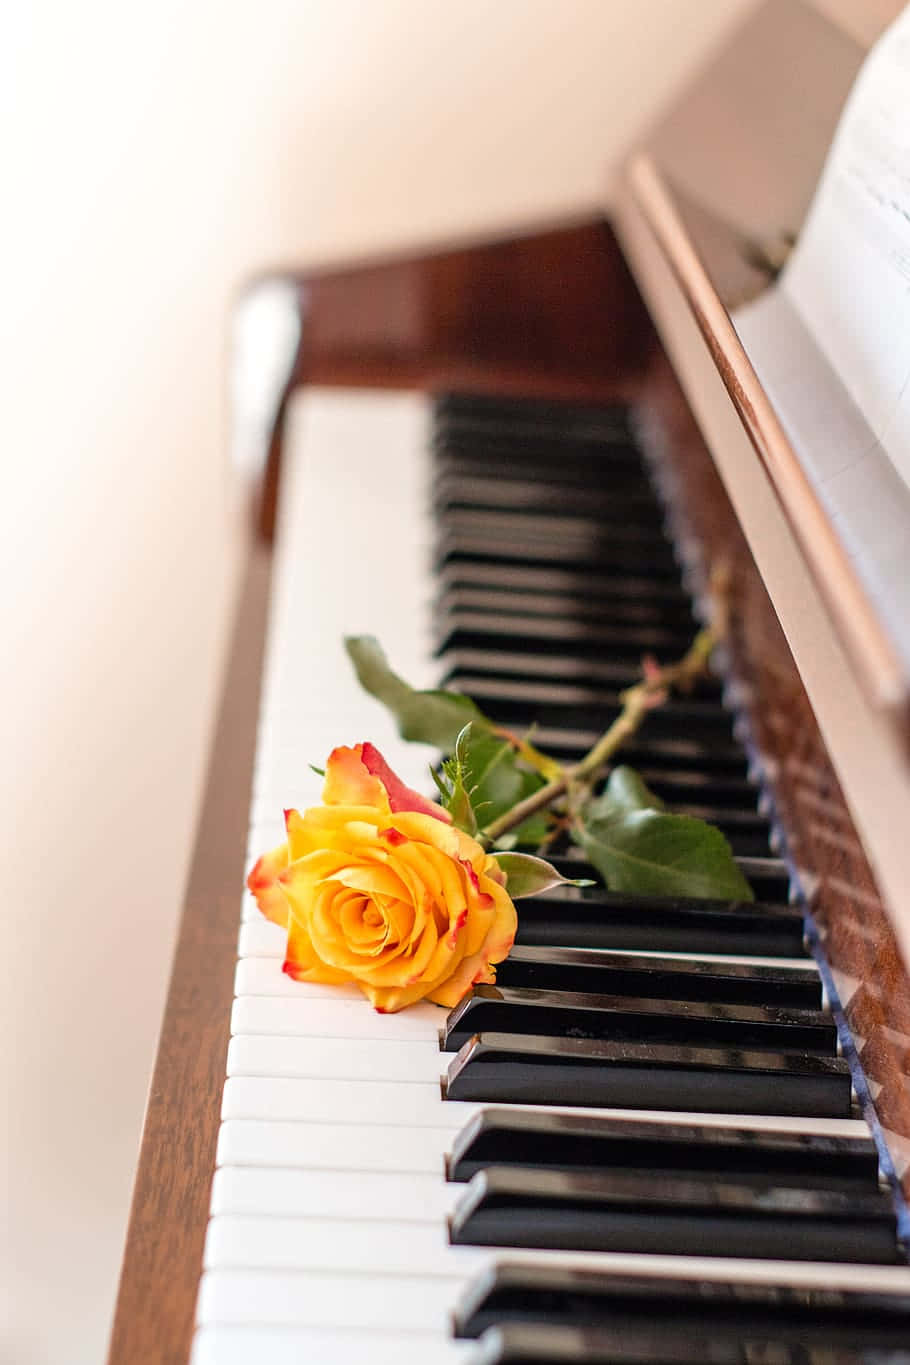 Instrumentomusical Piano Con Imagen De Rosa